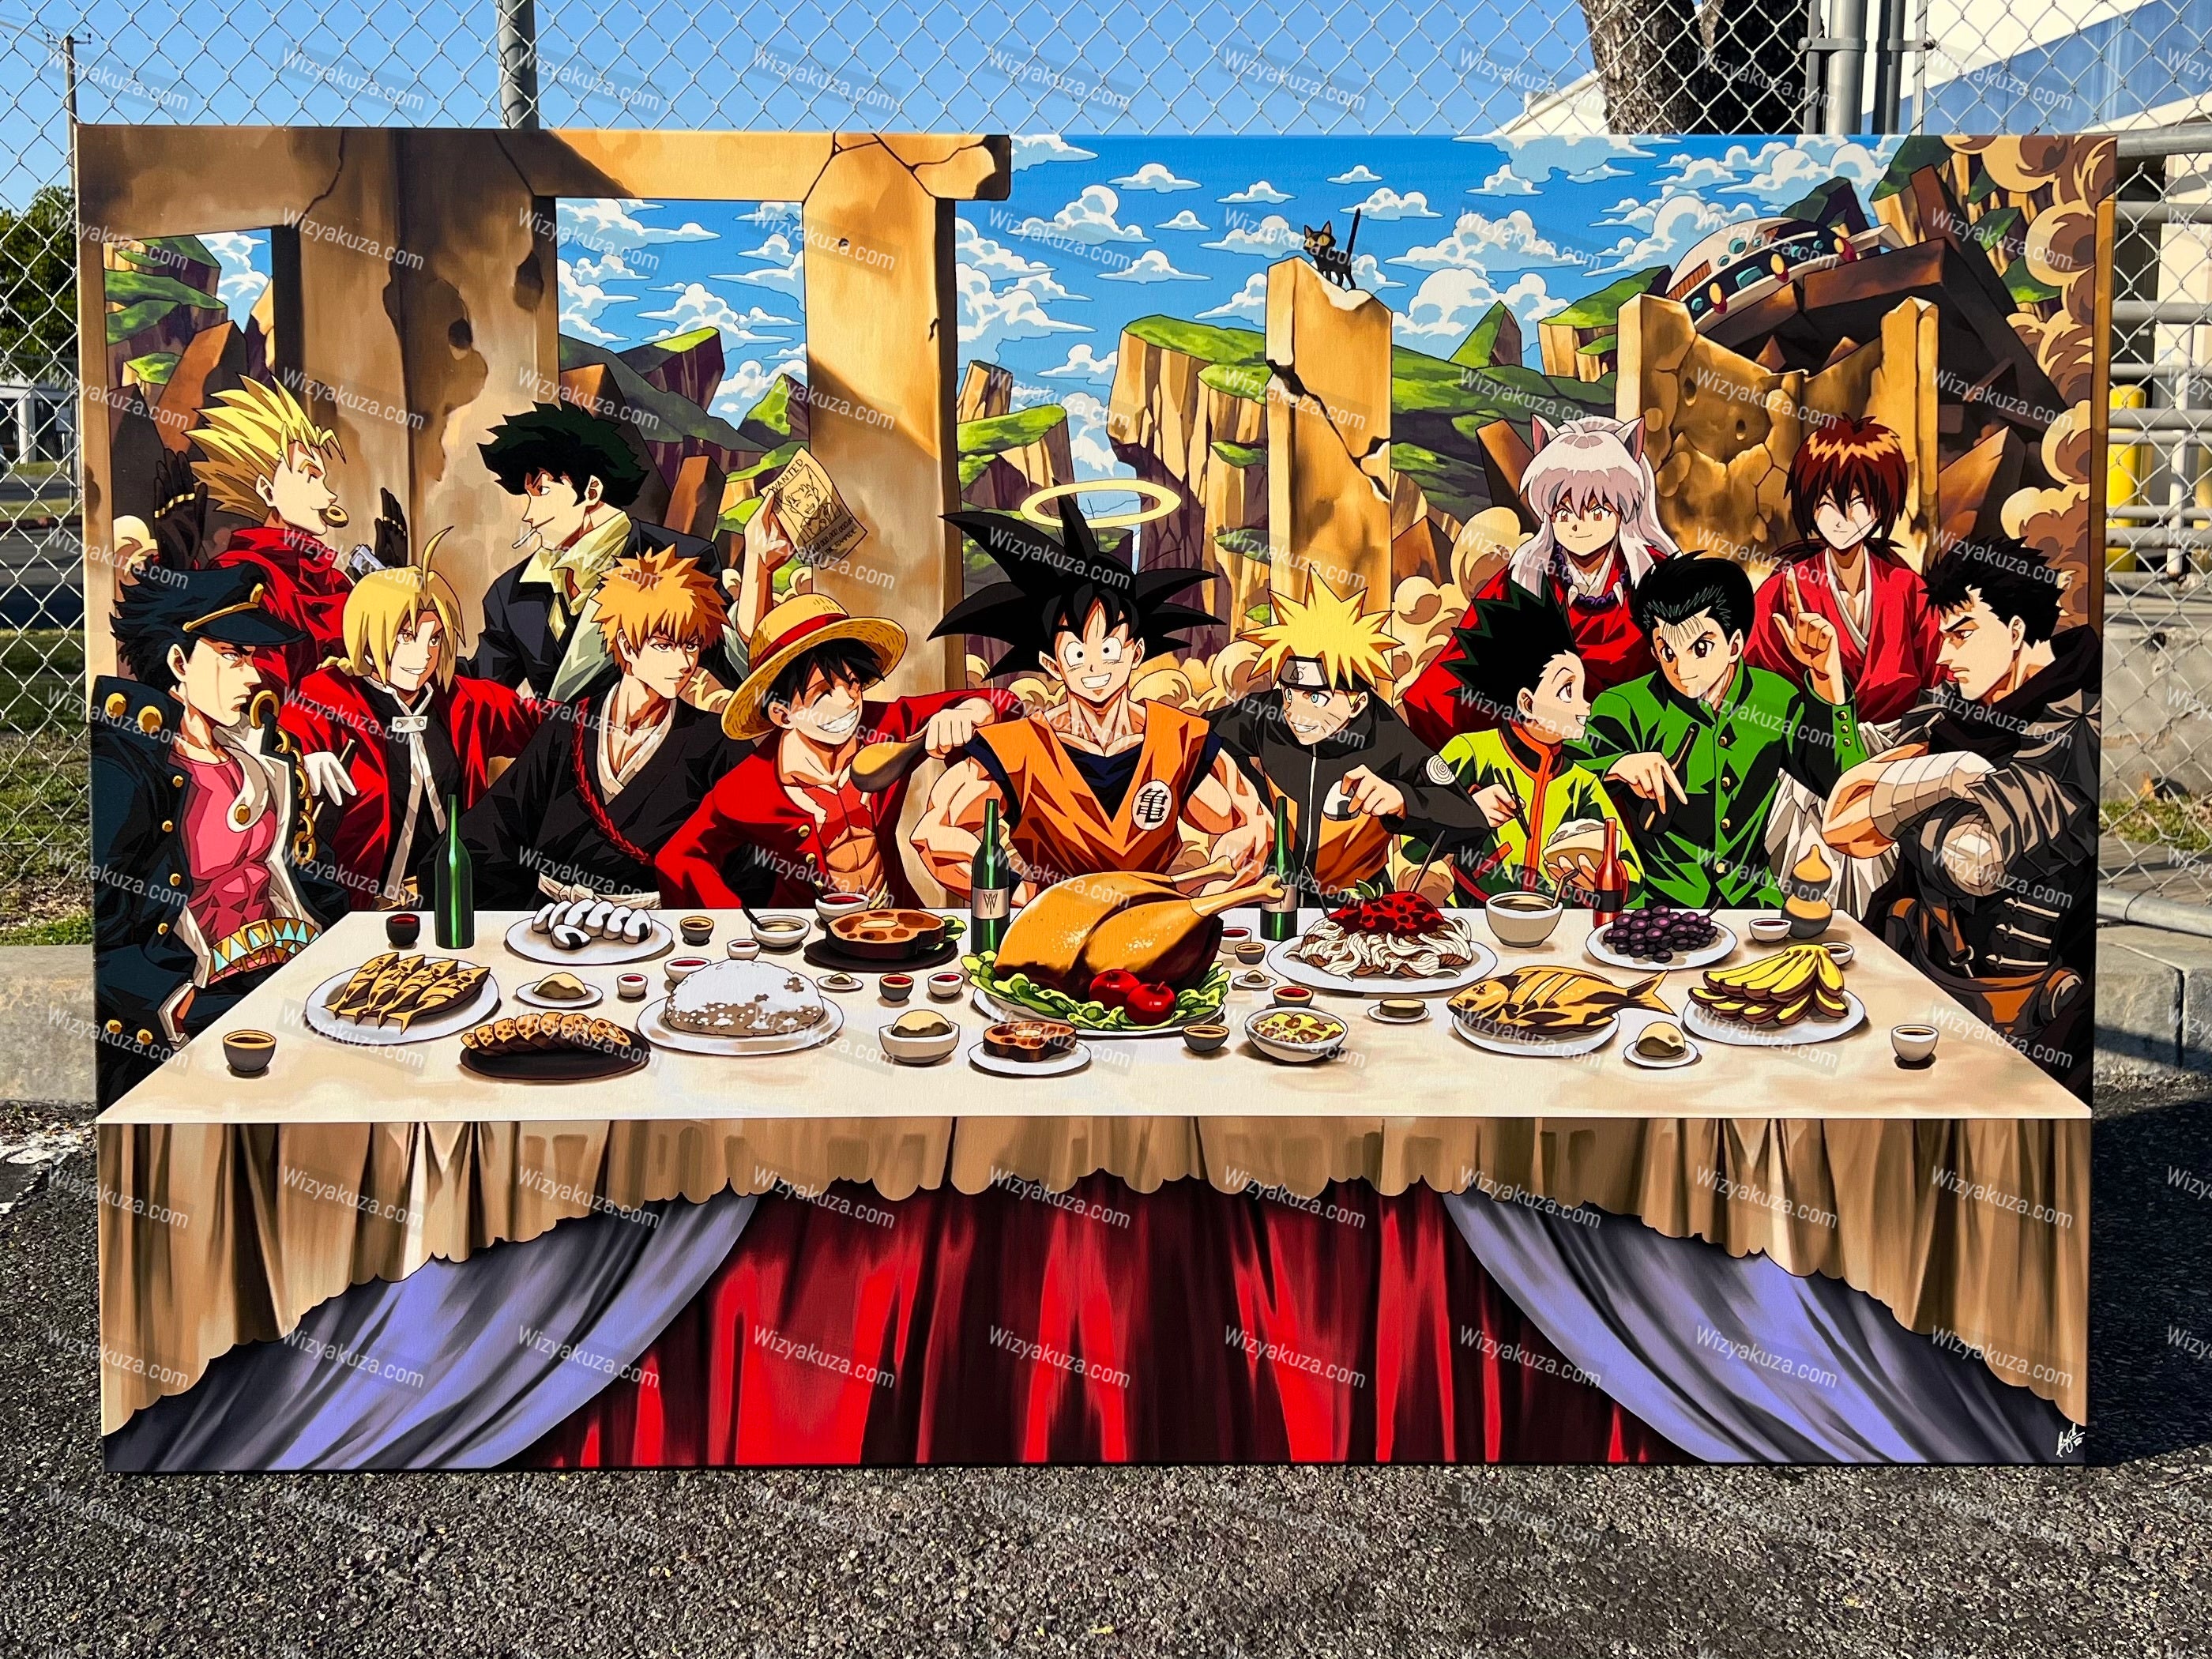 the anime last supper by AJTShrubb on DeviantArt